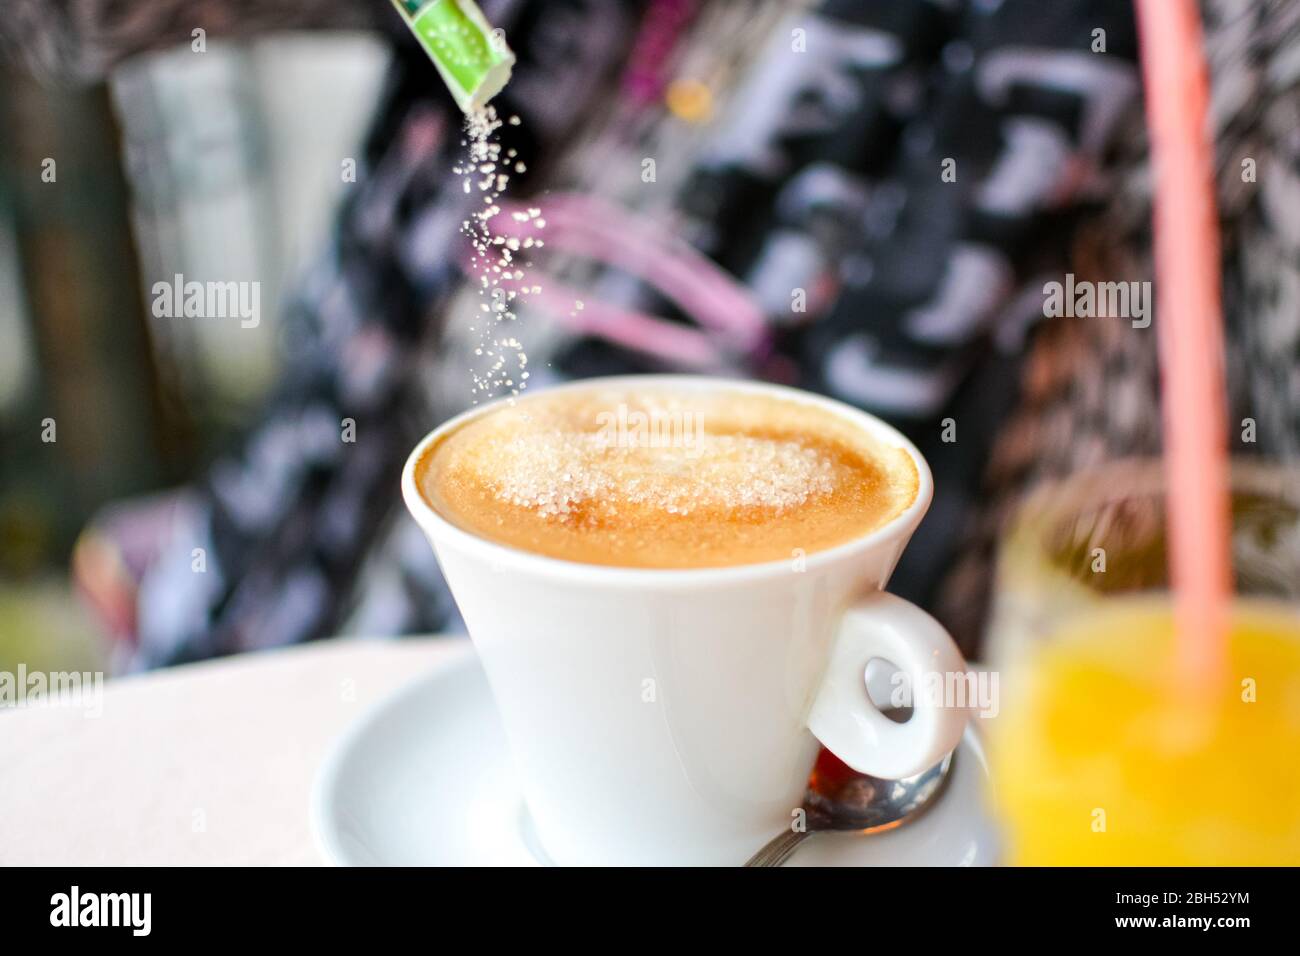 Pouring granulated sugar into a delicious cafe au lait, cafe creme or espresso at a Parisian cafe Stock Photo